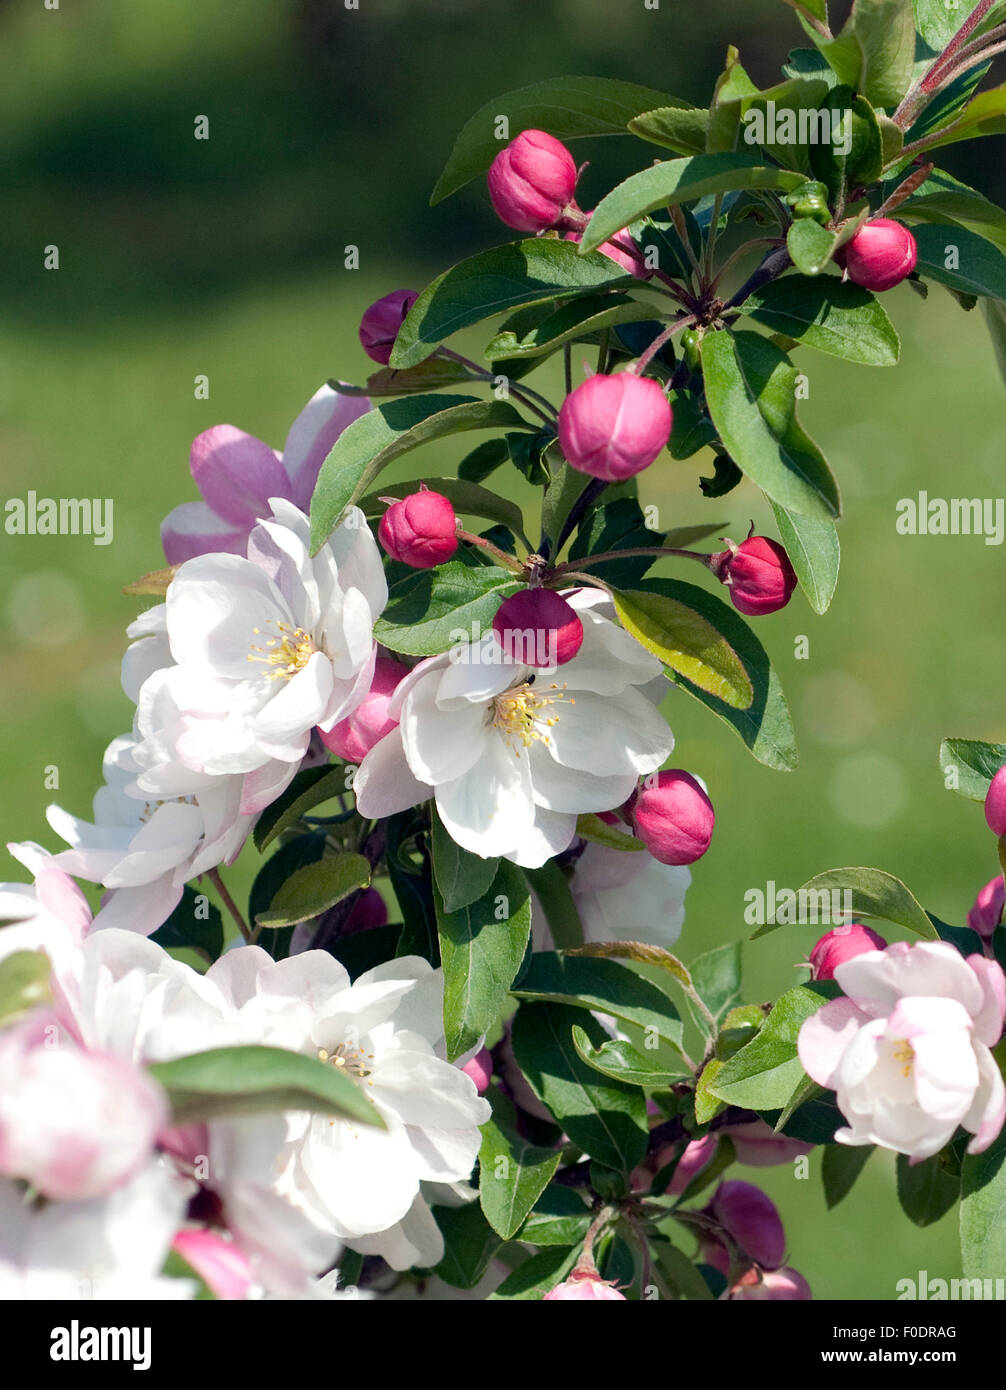 Apfelbluete; Apfelblueten; Malus, Apfelbaumblueten, Stock Photo